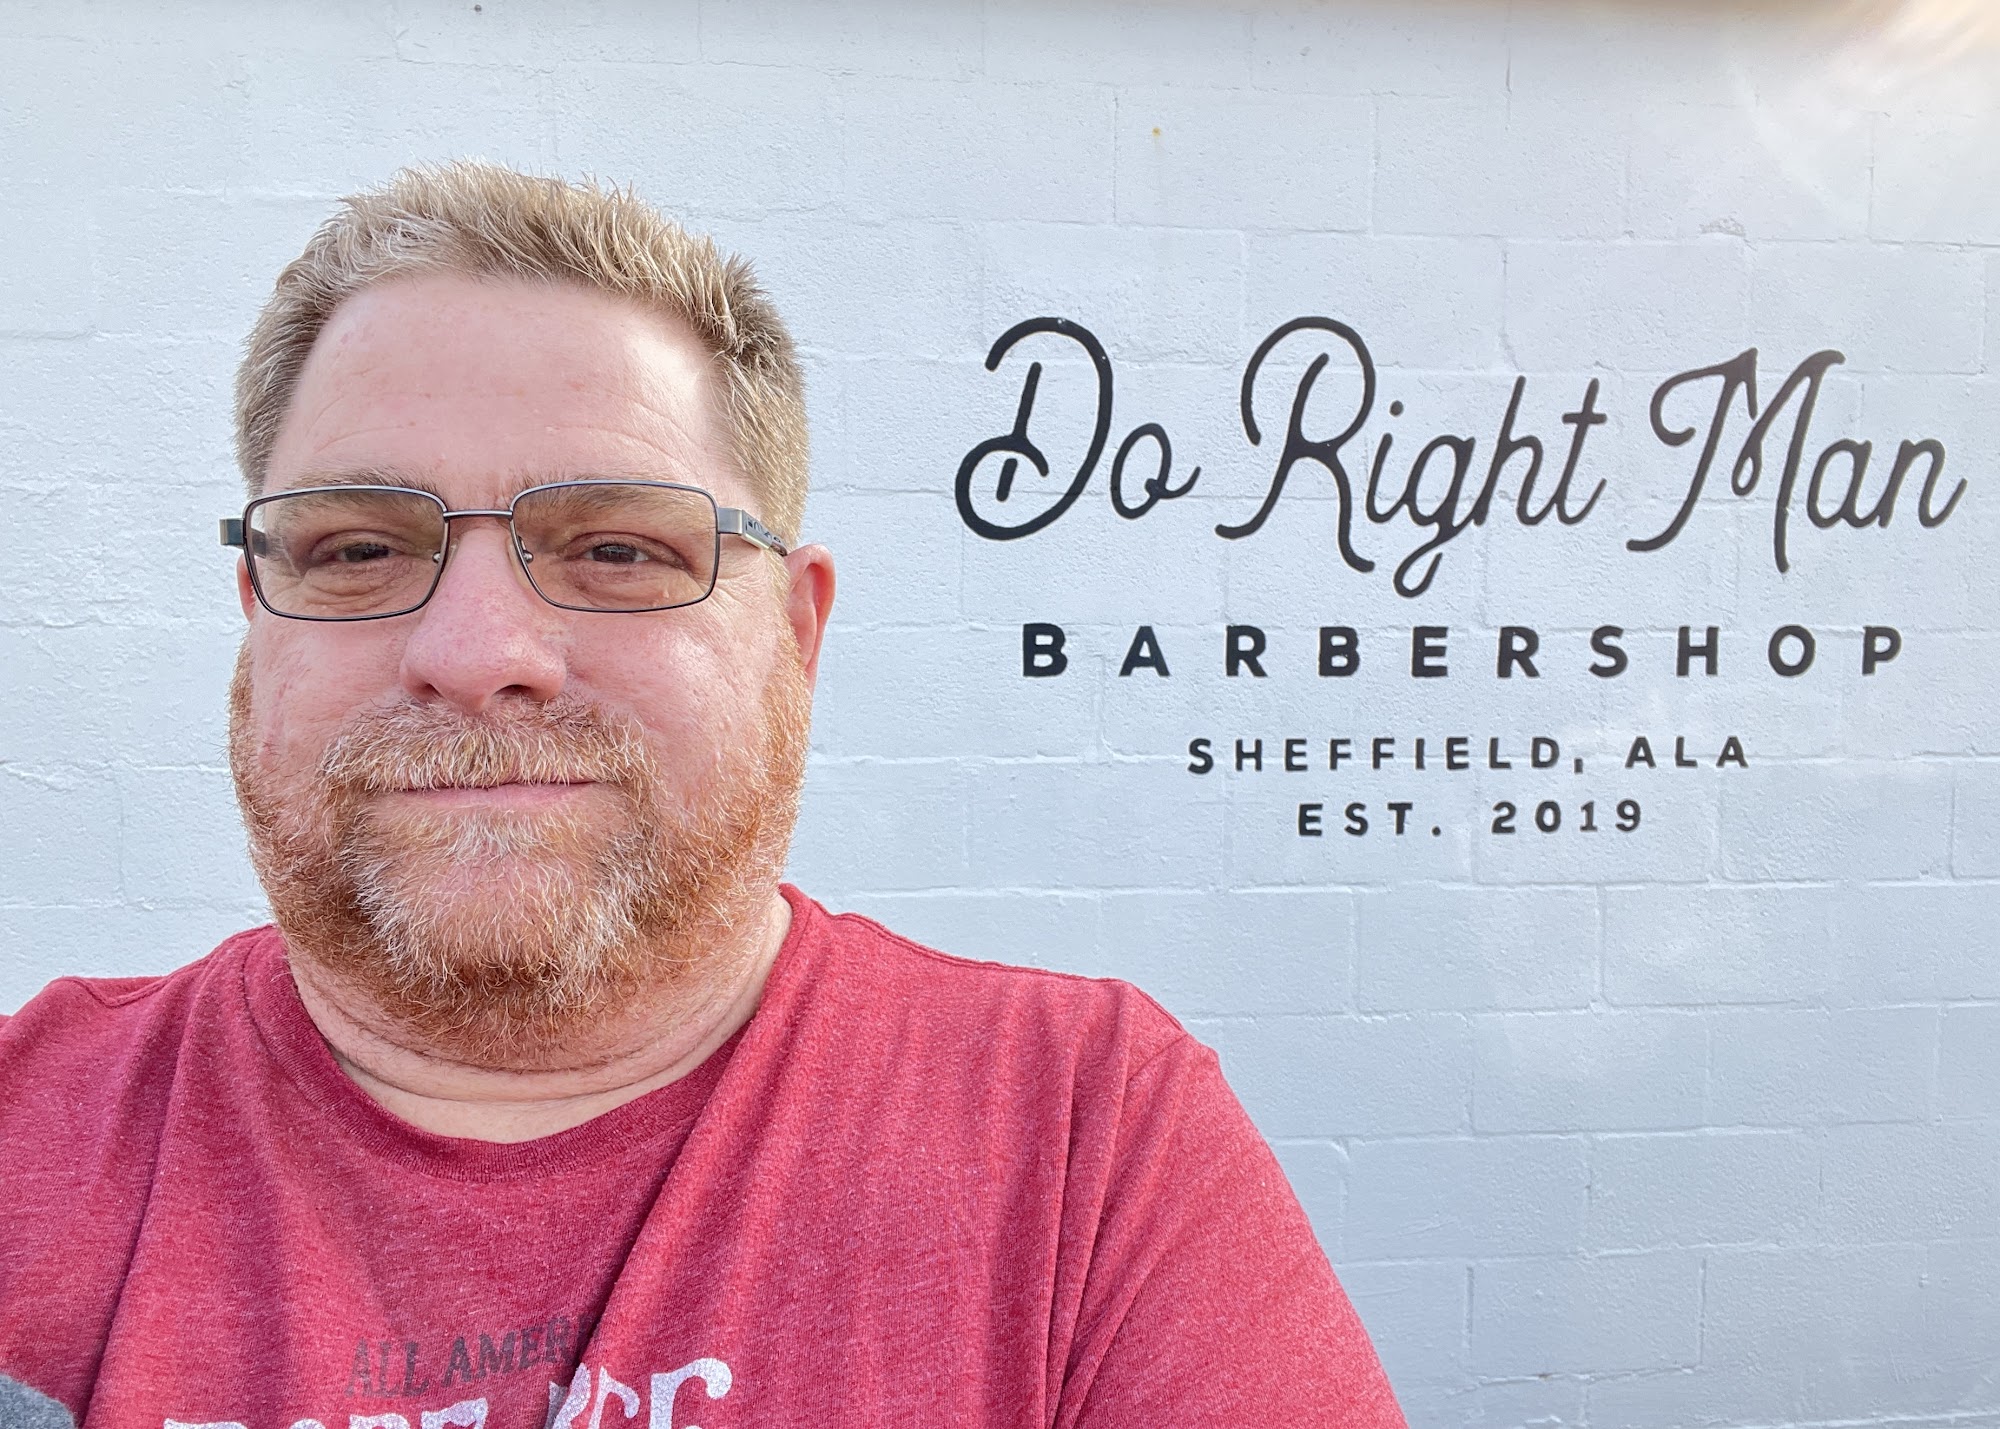 Do Right Man Barbershop 122 N Nashville Ave, Sheffield Alabama 35660